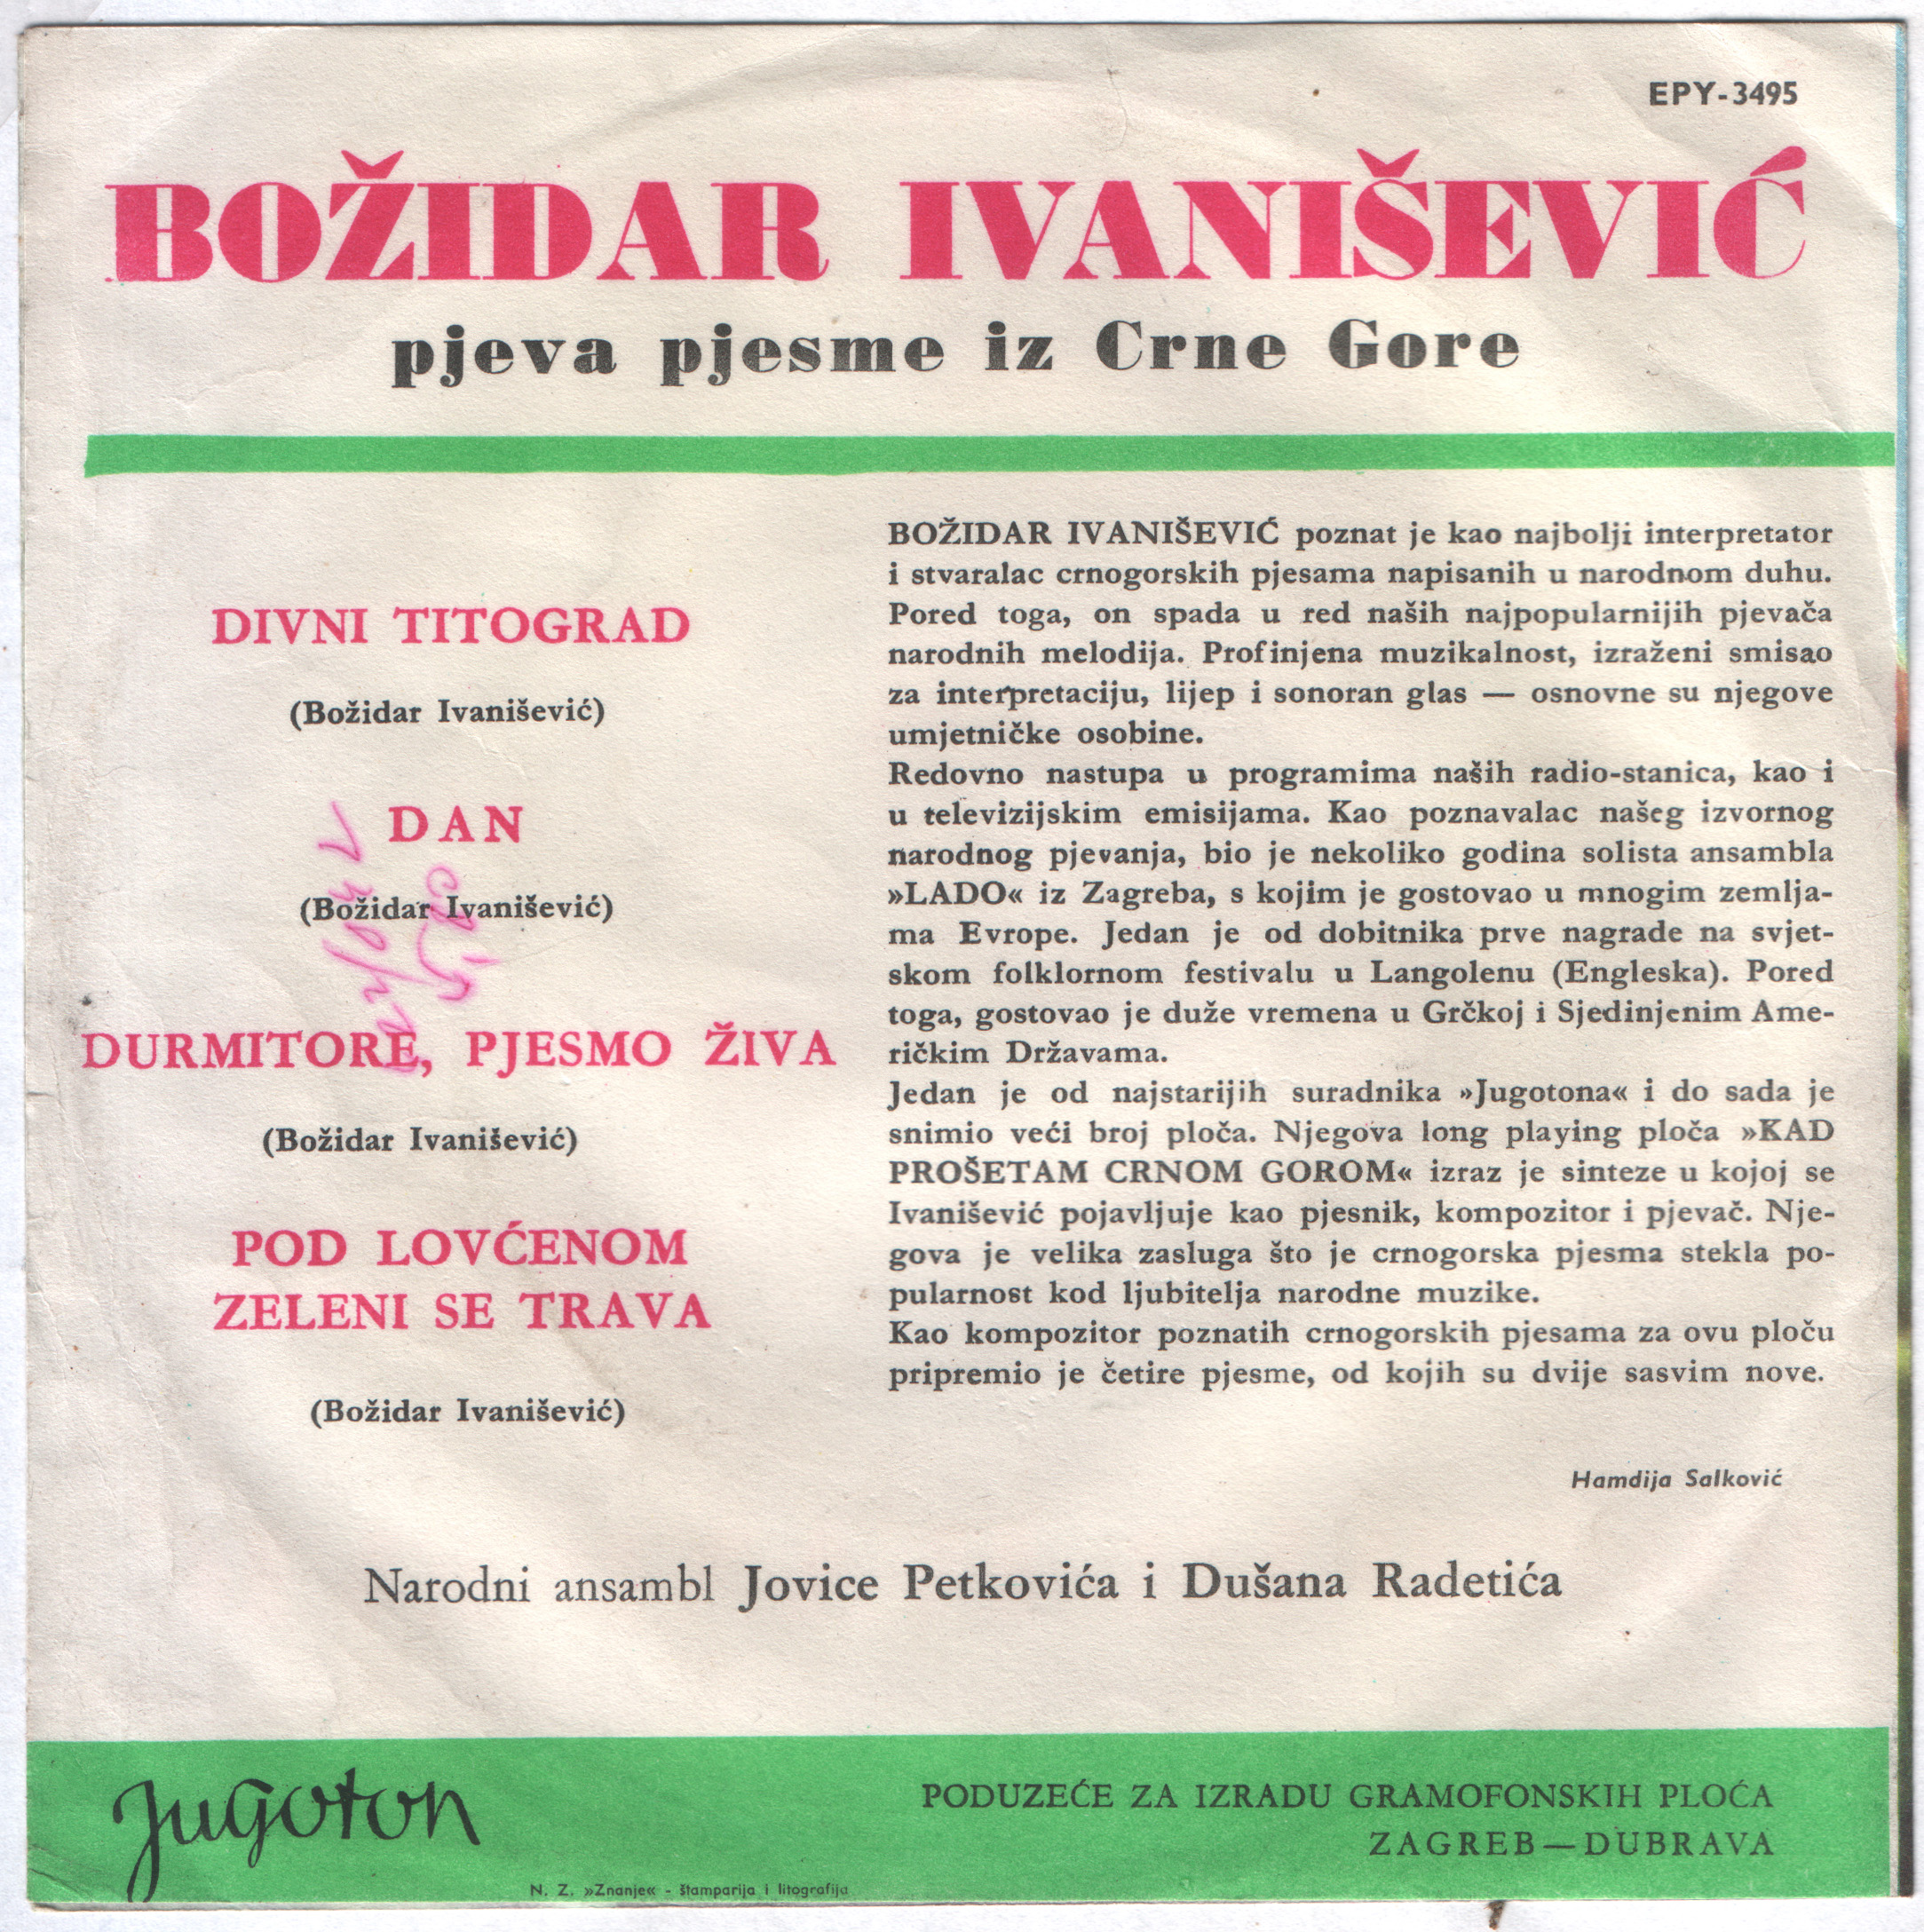 Bozidar Ivanisevic 1965 Z